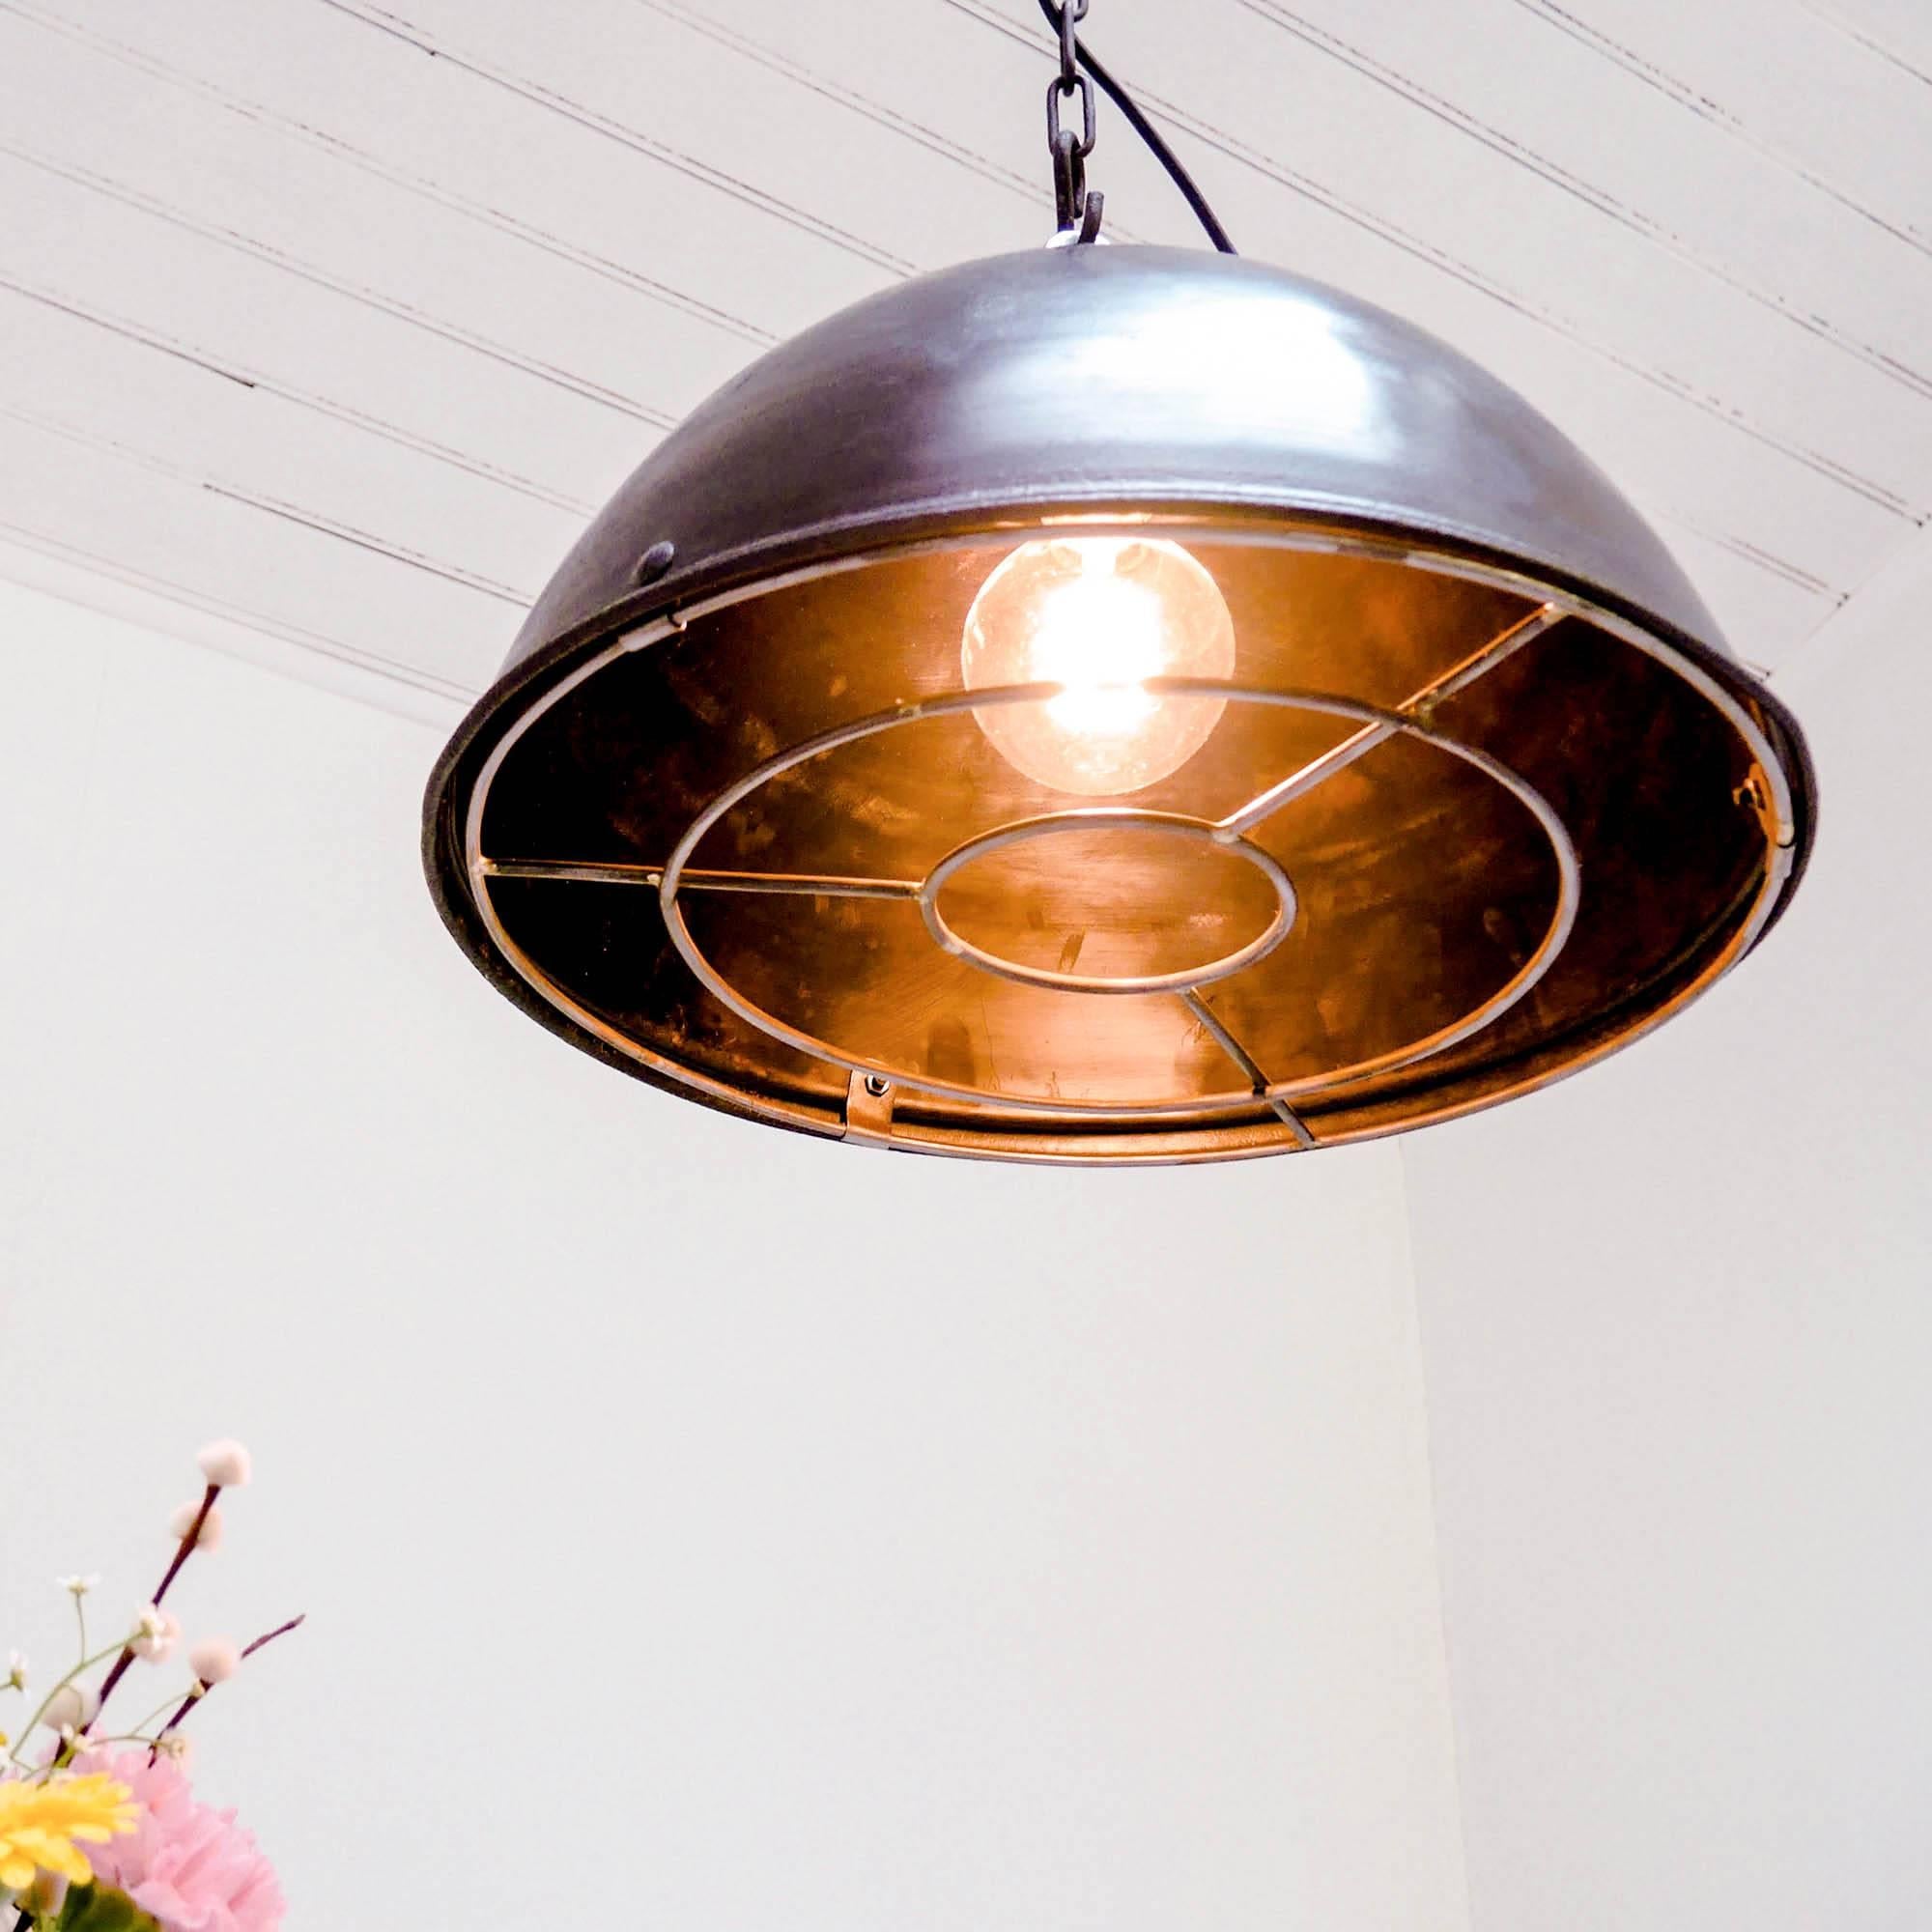 Patinated Ceiling Lamp “Filament”, France, Circa 1950